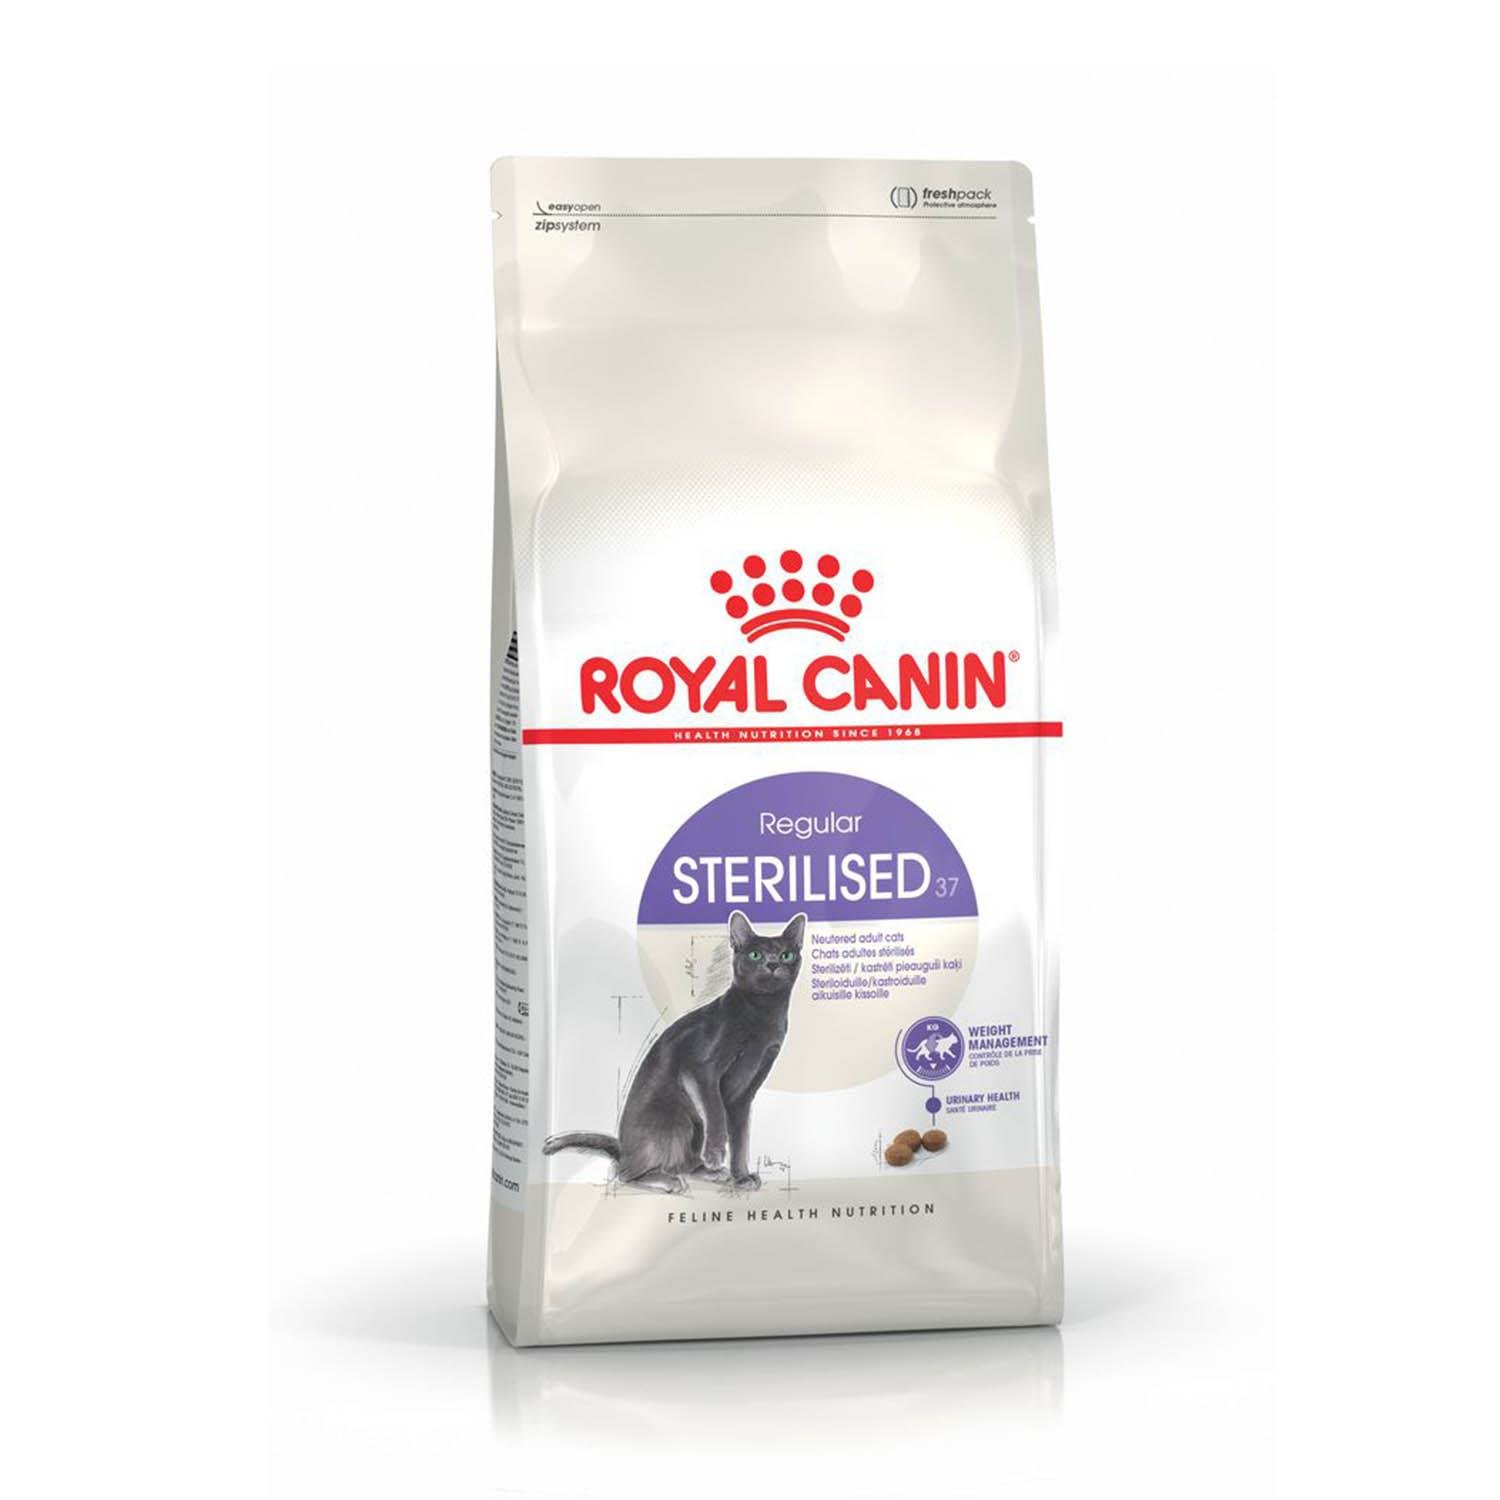 Royal Canin Sterilised 37 Kisirlaştirilmiş Kedi Mamasi 4 Kg